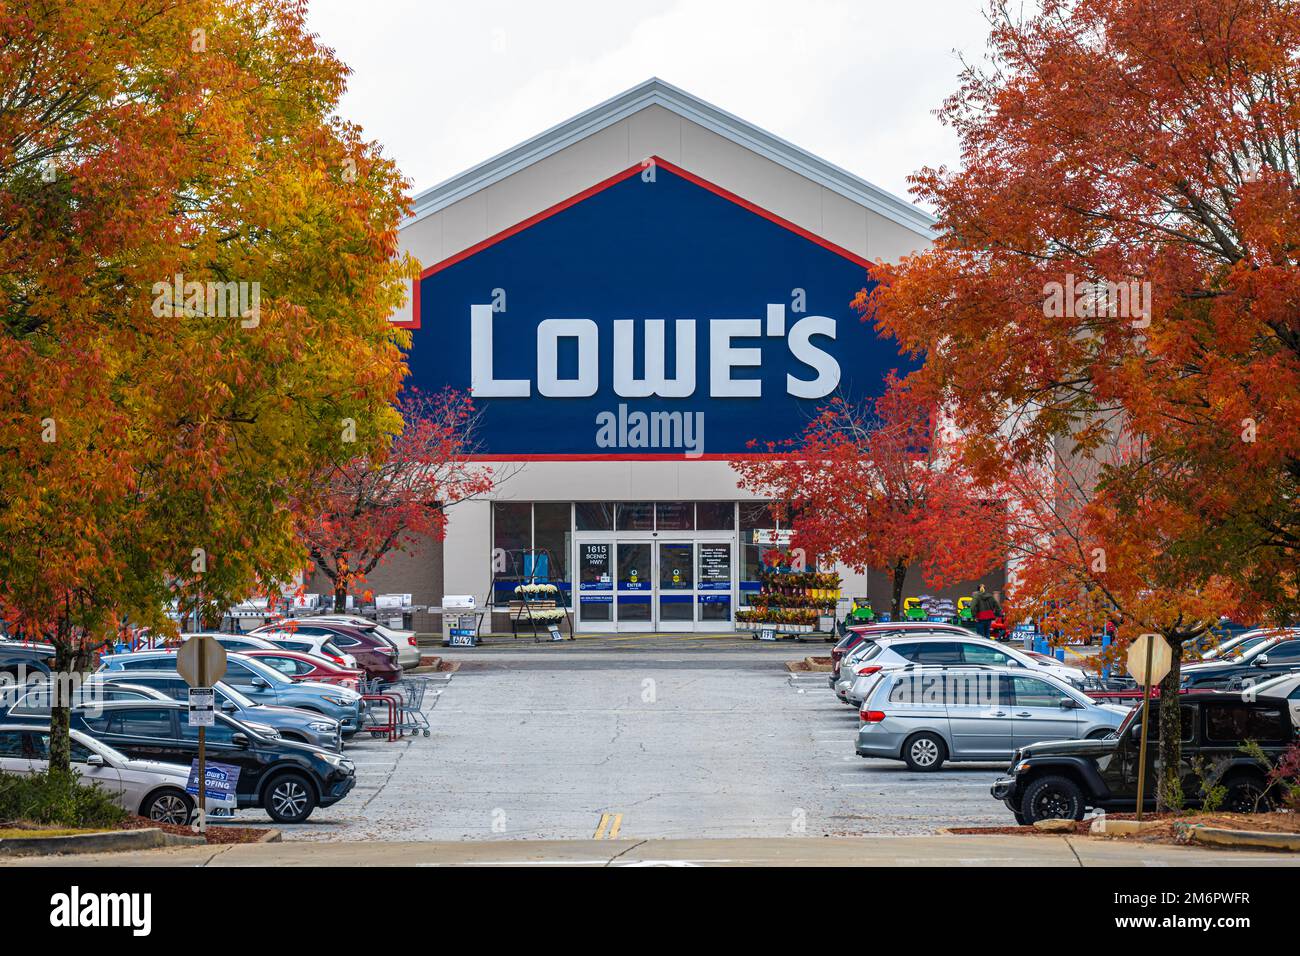 Lowe's home improvement store with colorful autumn foliage in Snellville (Metro Atlanta), Georgia. (USA) Stock Photo